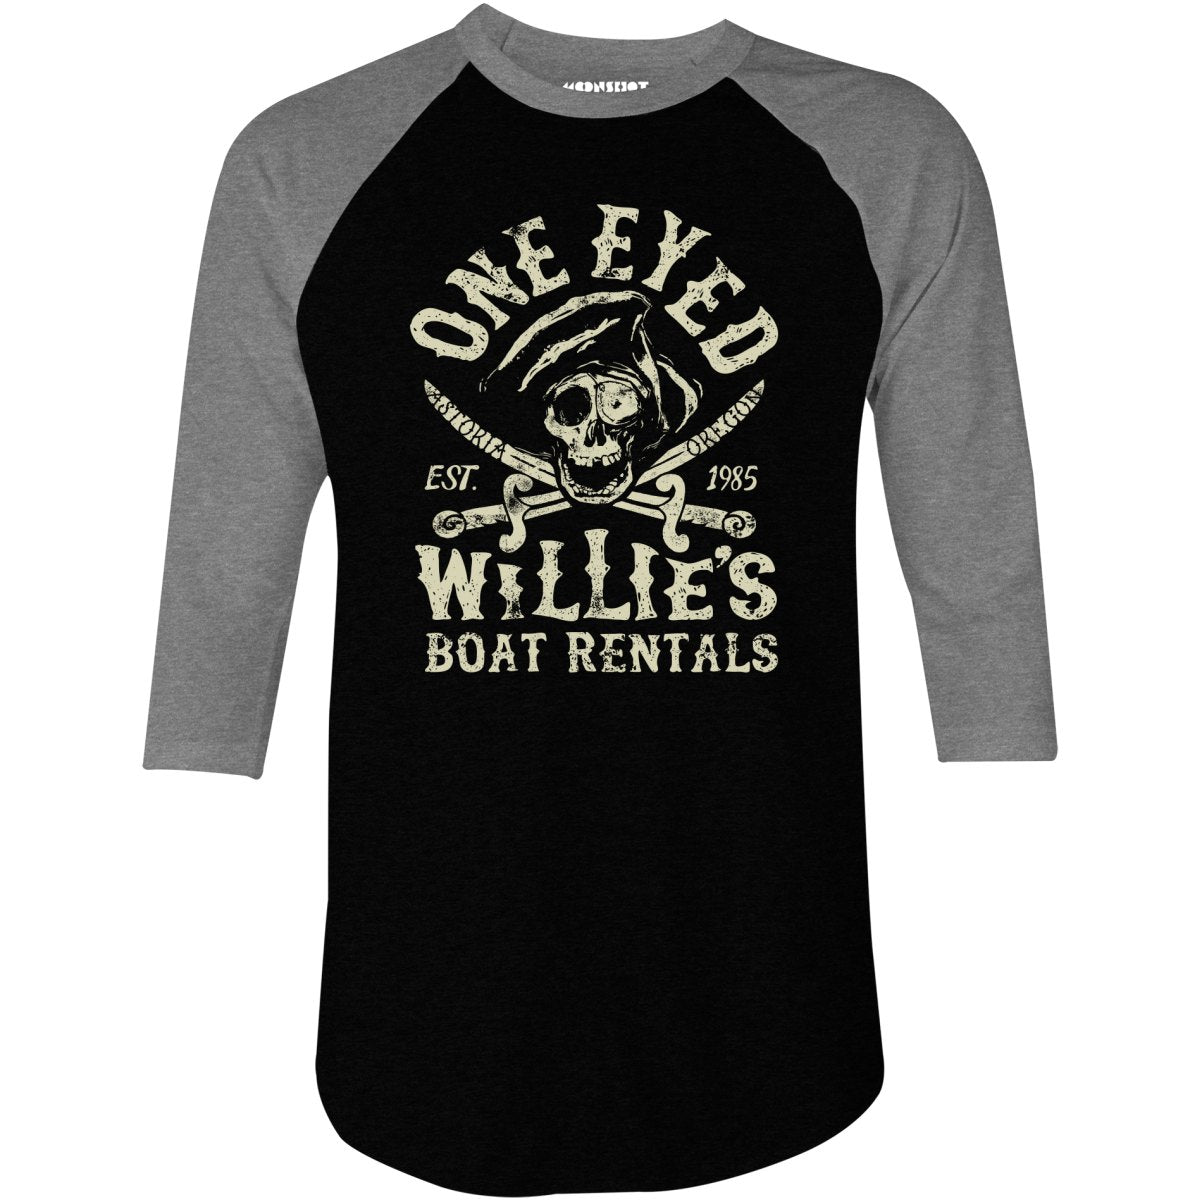 One Eyed Willie's Boat Rentals - 3/4 Sleeve Raglan T-Shirt